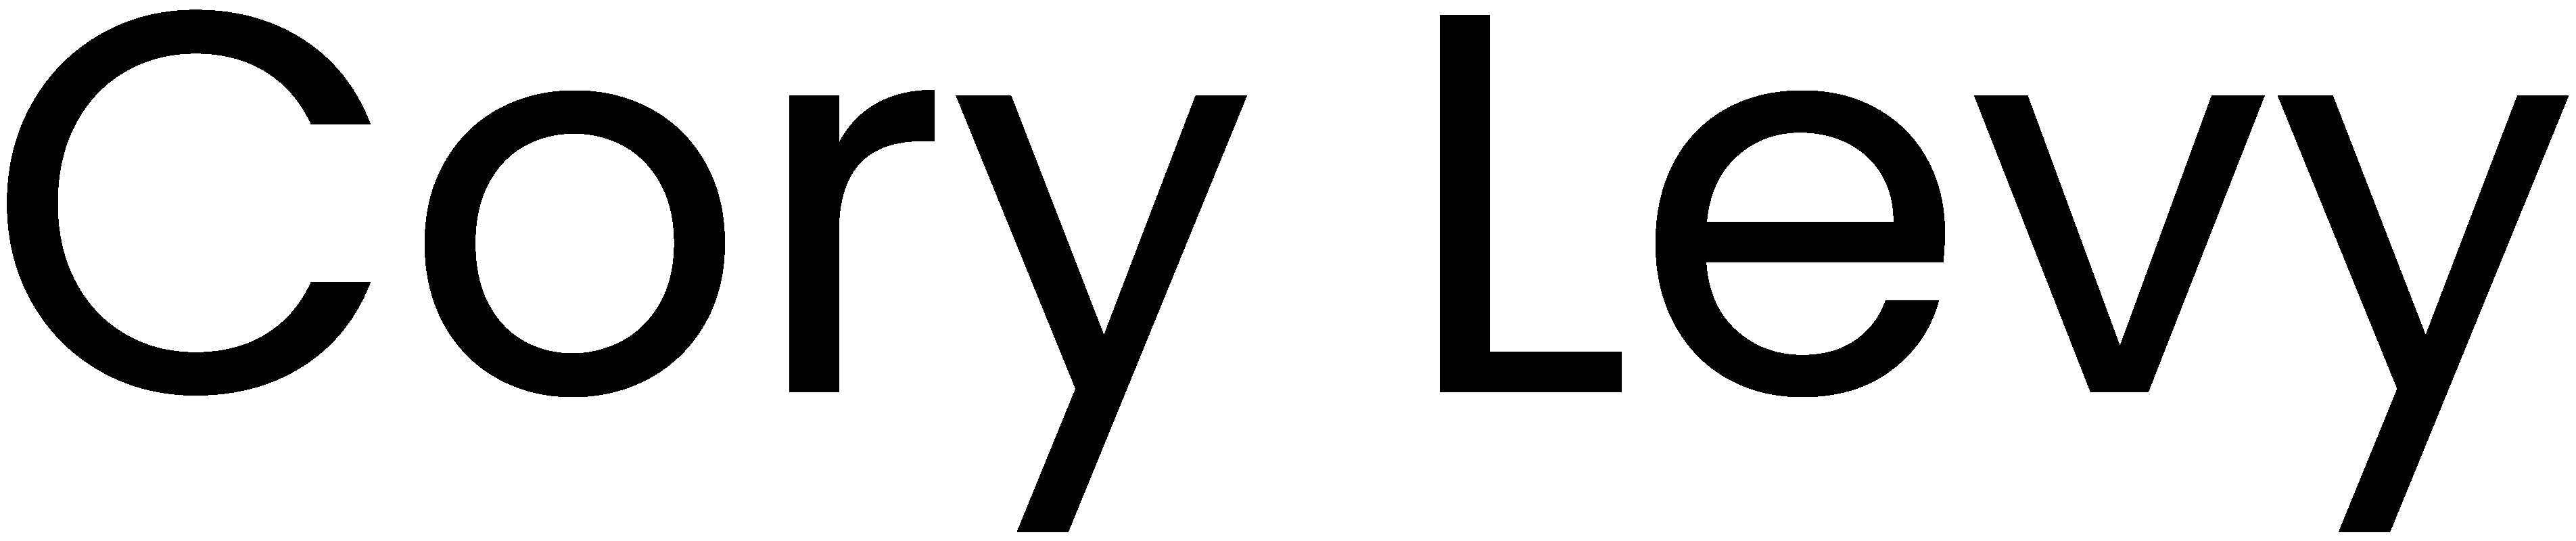 cory levy logo